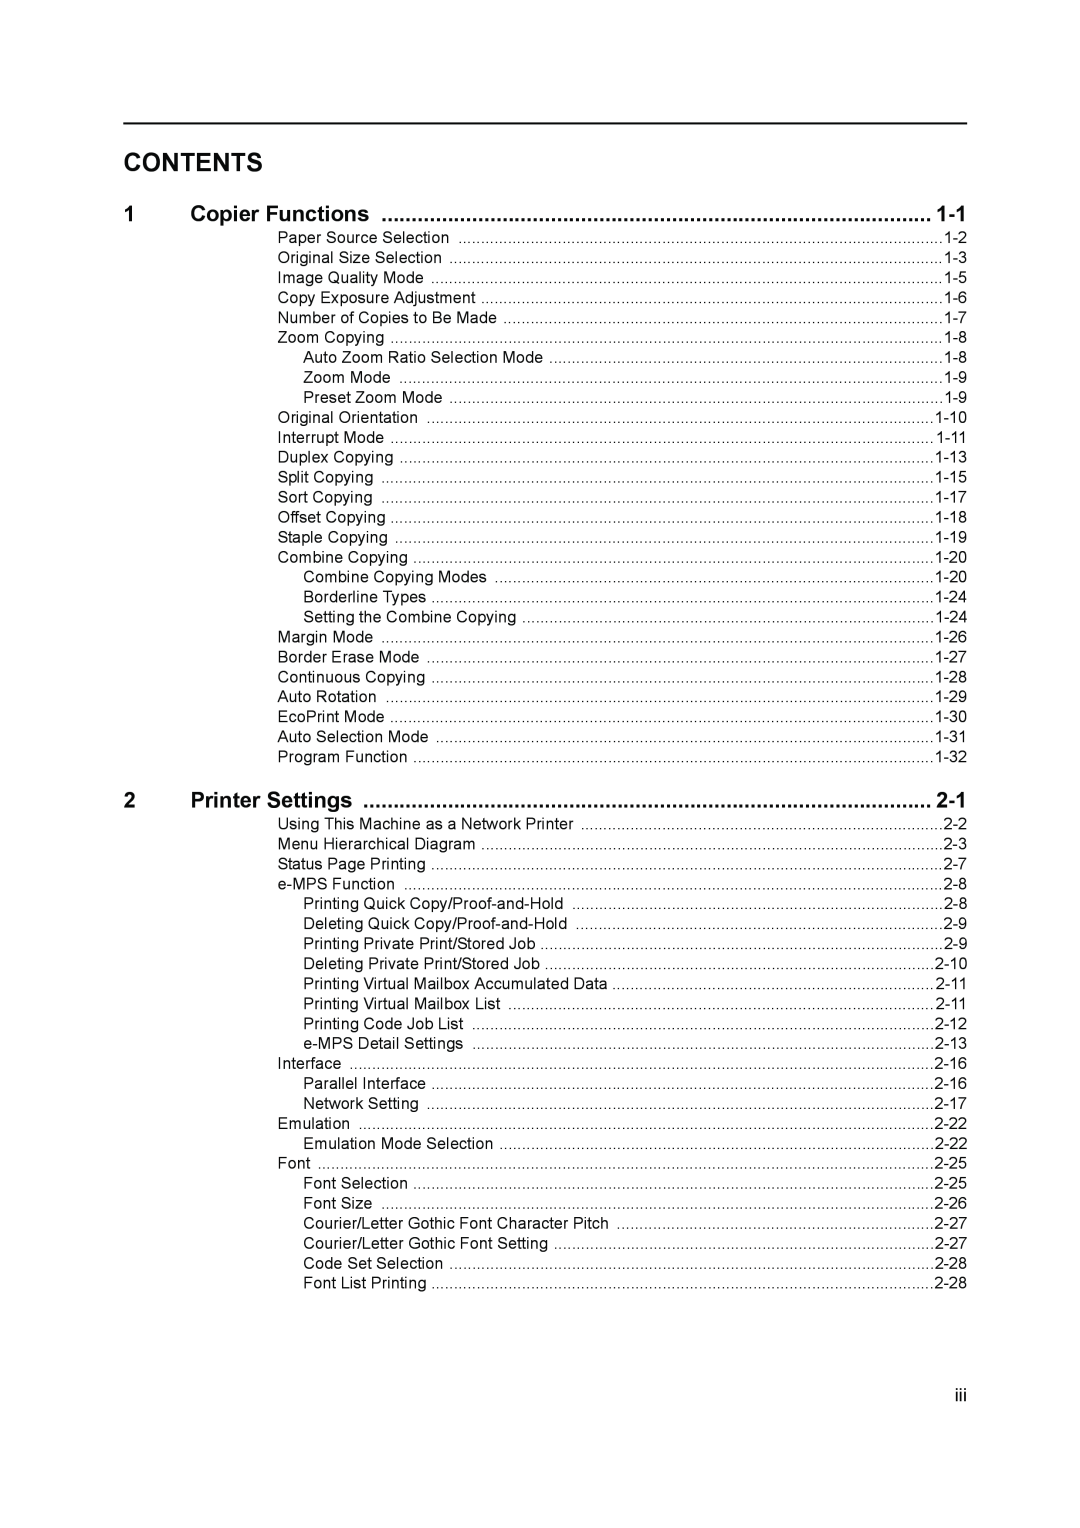 Kyocera 2550, 2050, 1650 manual Contents, Copier Functions, Printer Settings 